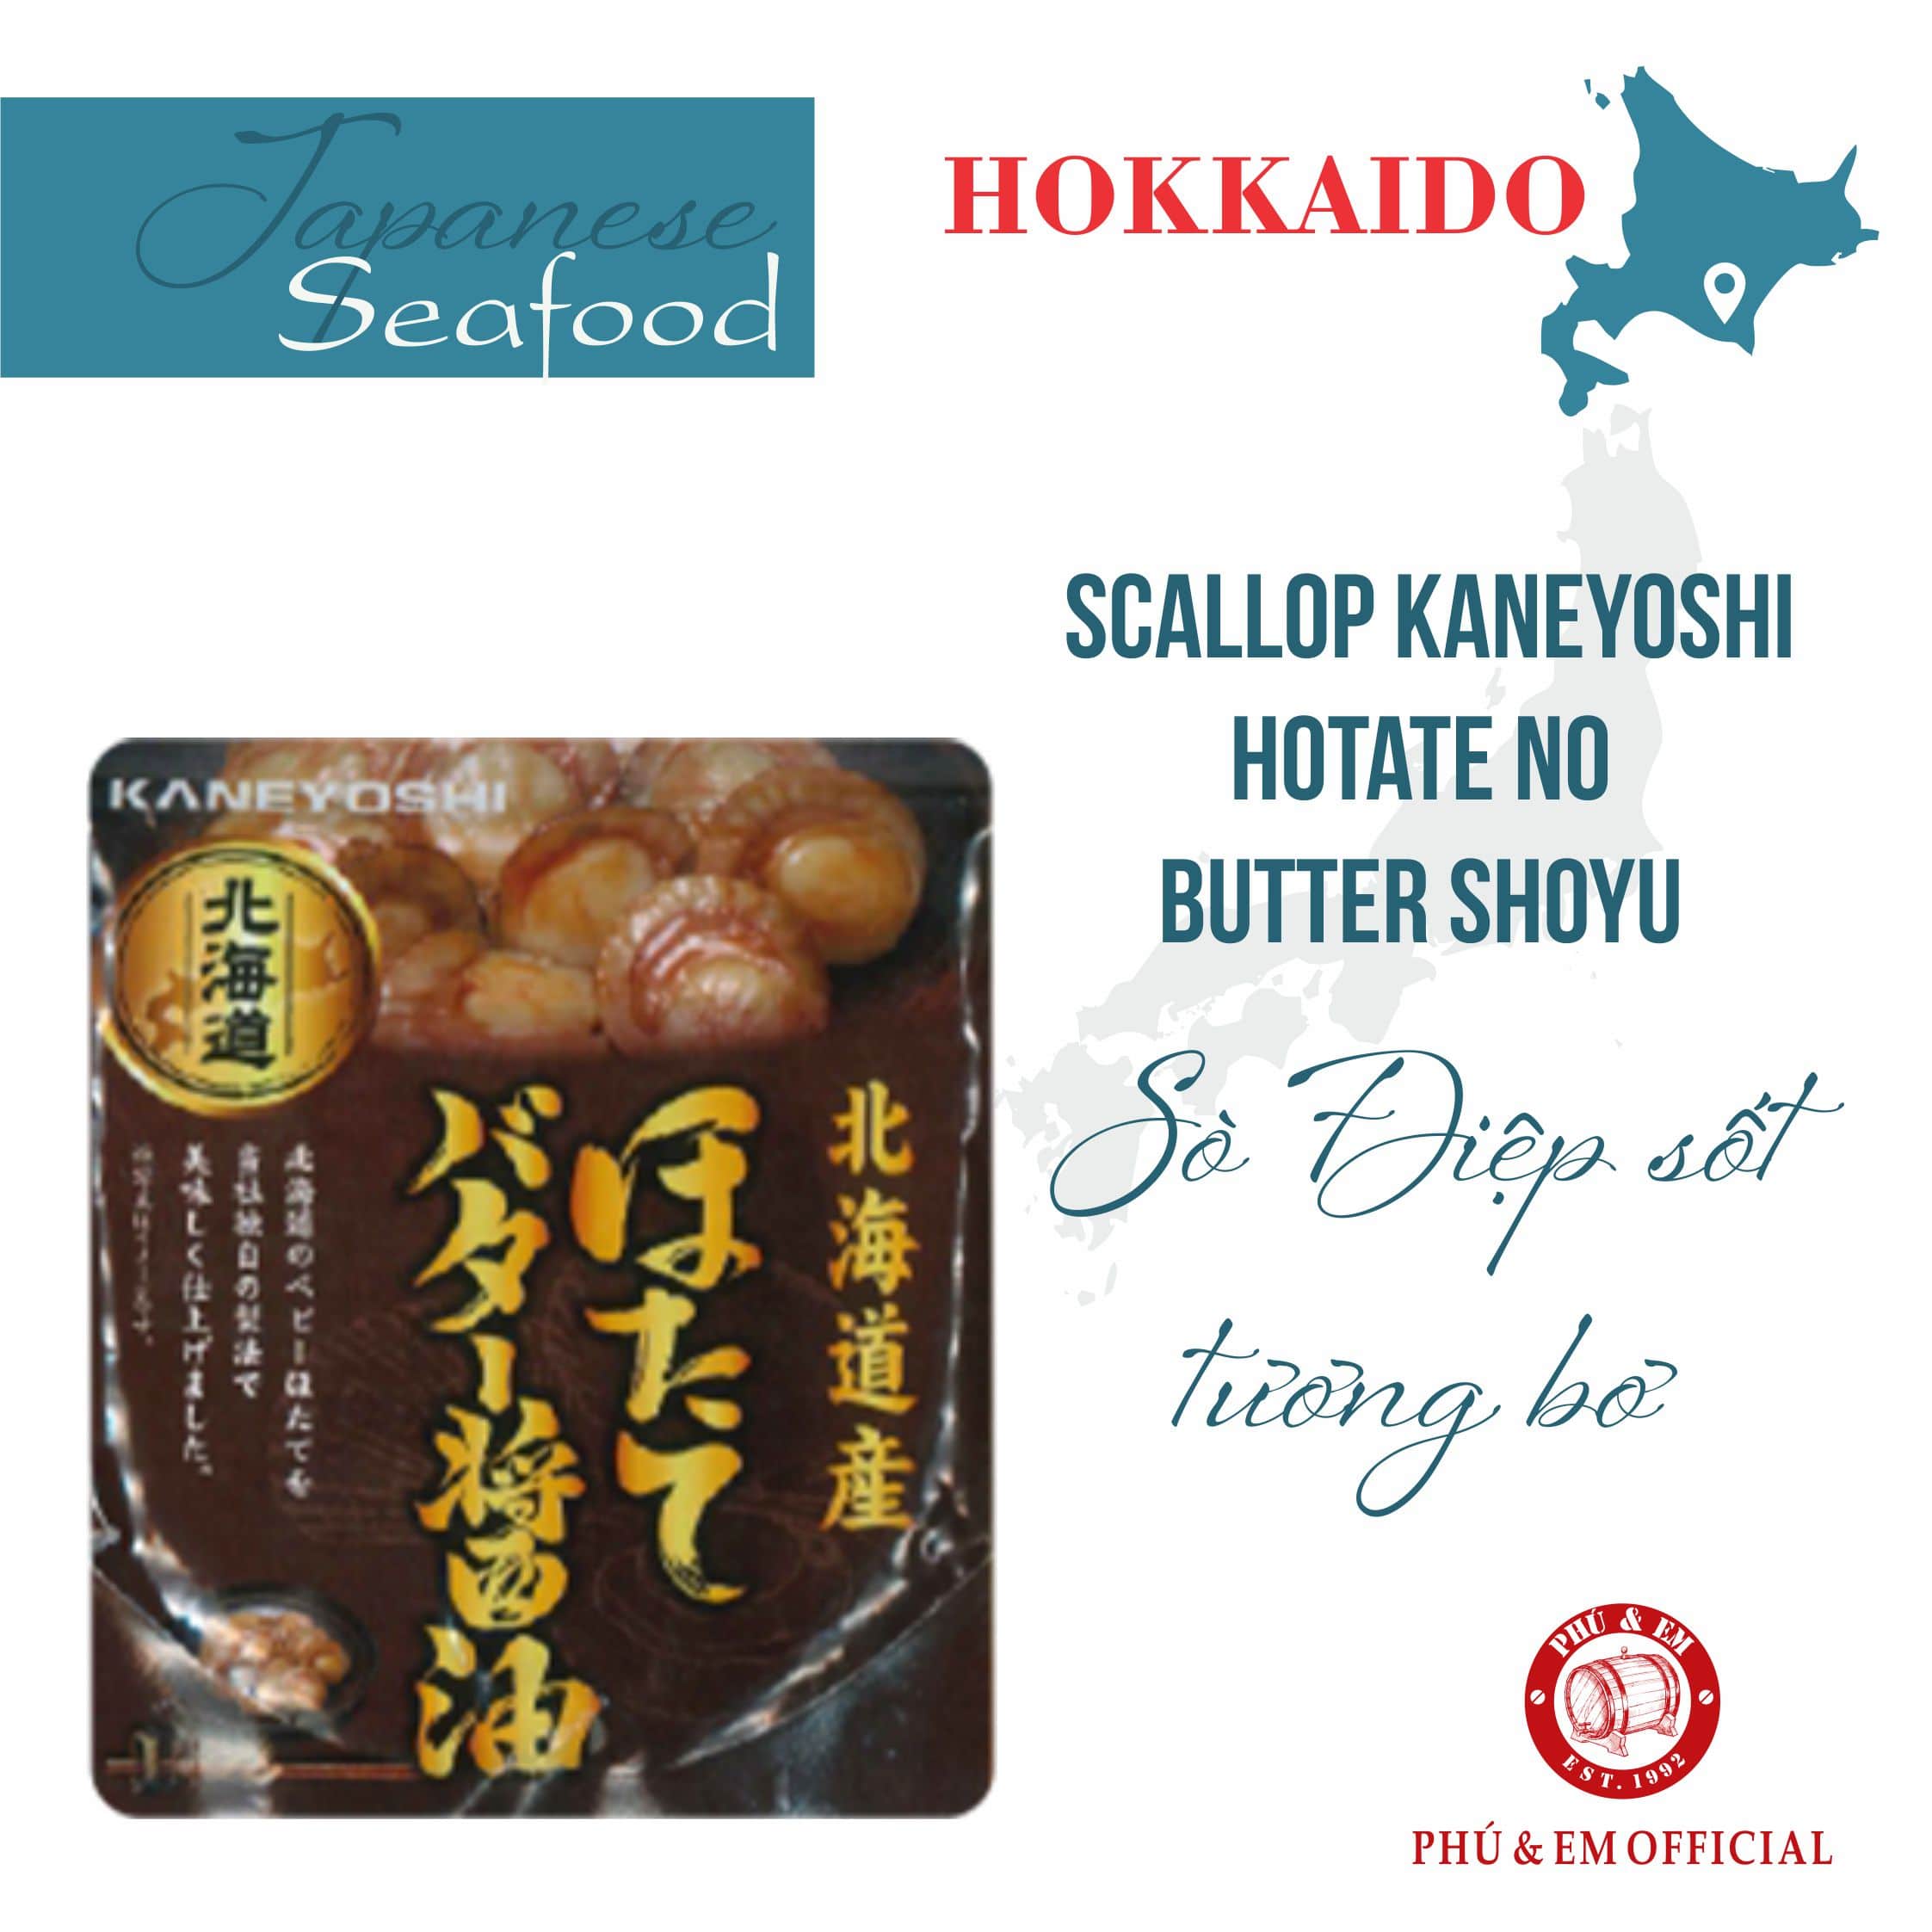 Sò Điệp Sốt Tương Bơ - Scallop Kaneyoshi Hotate No Butter Shoyu